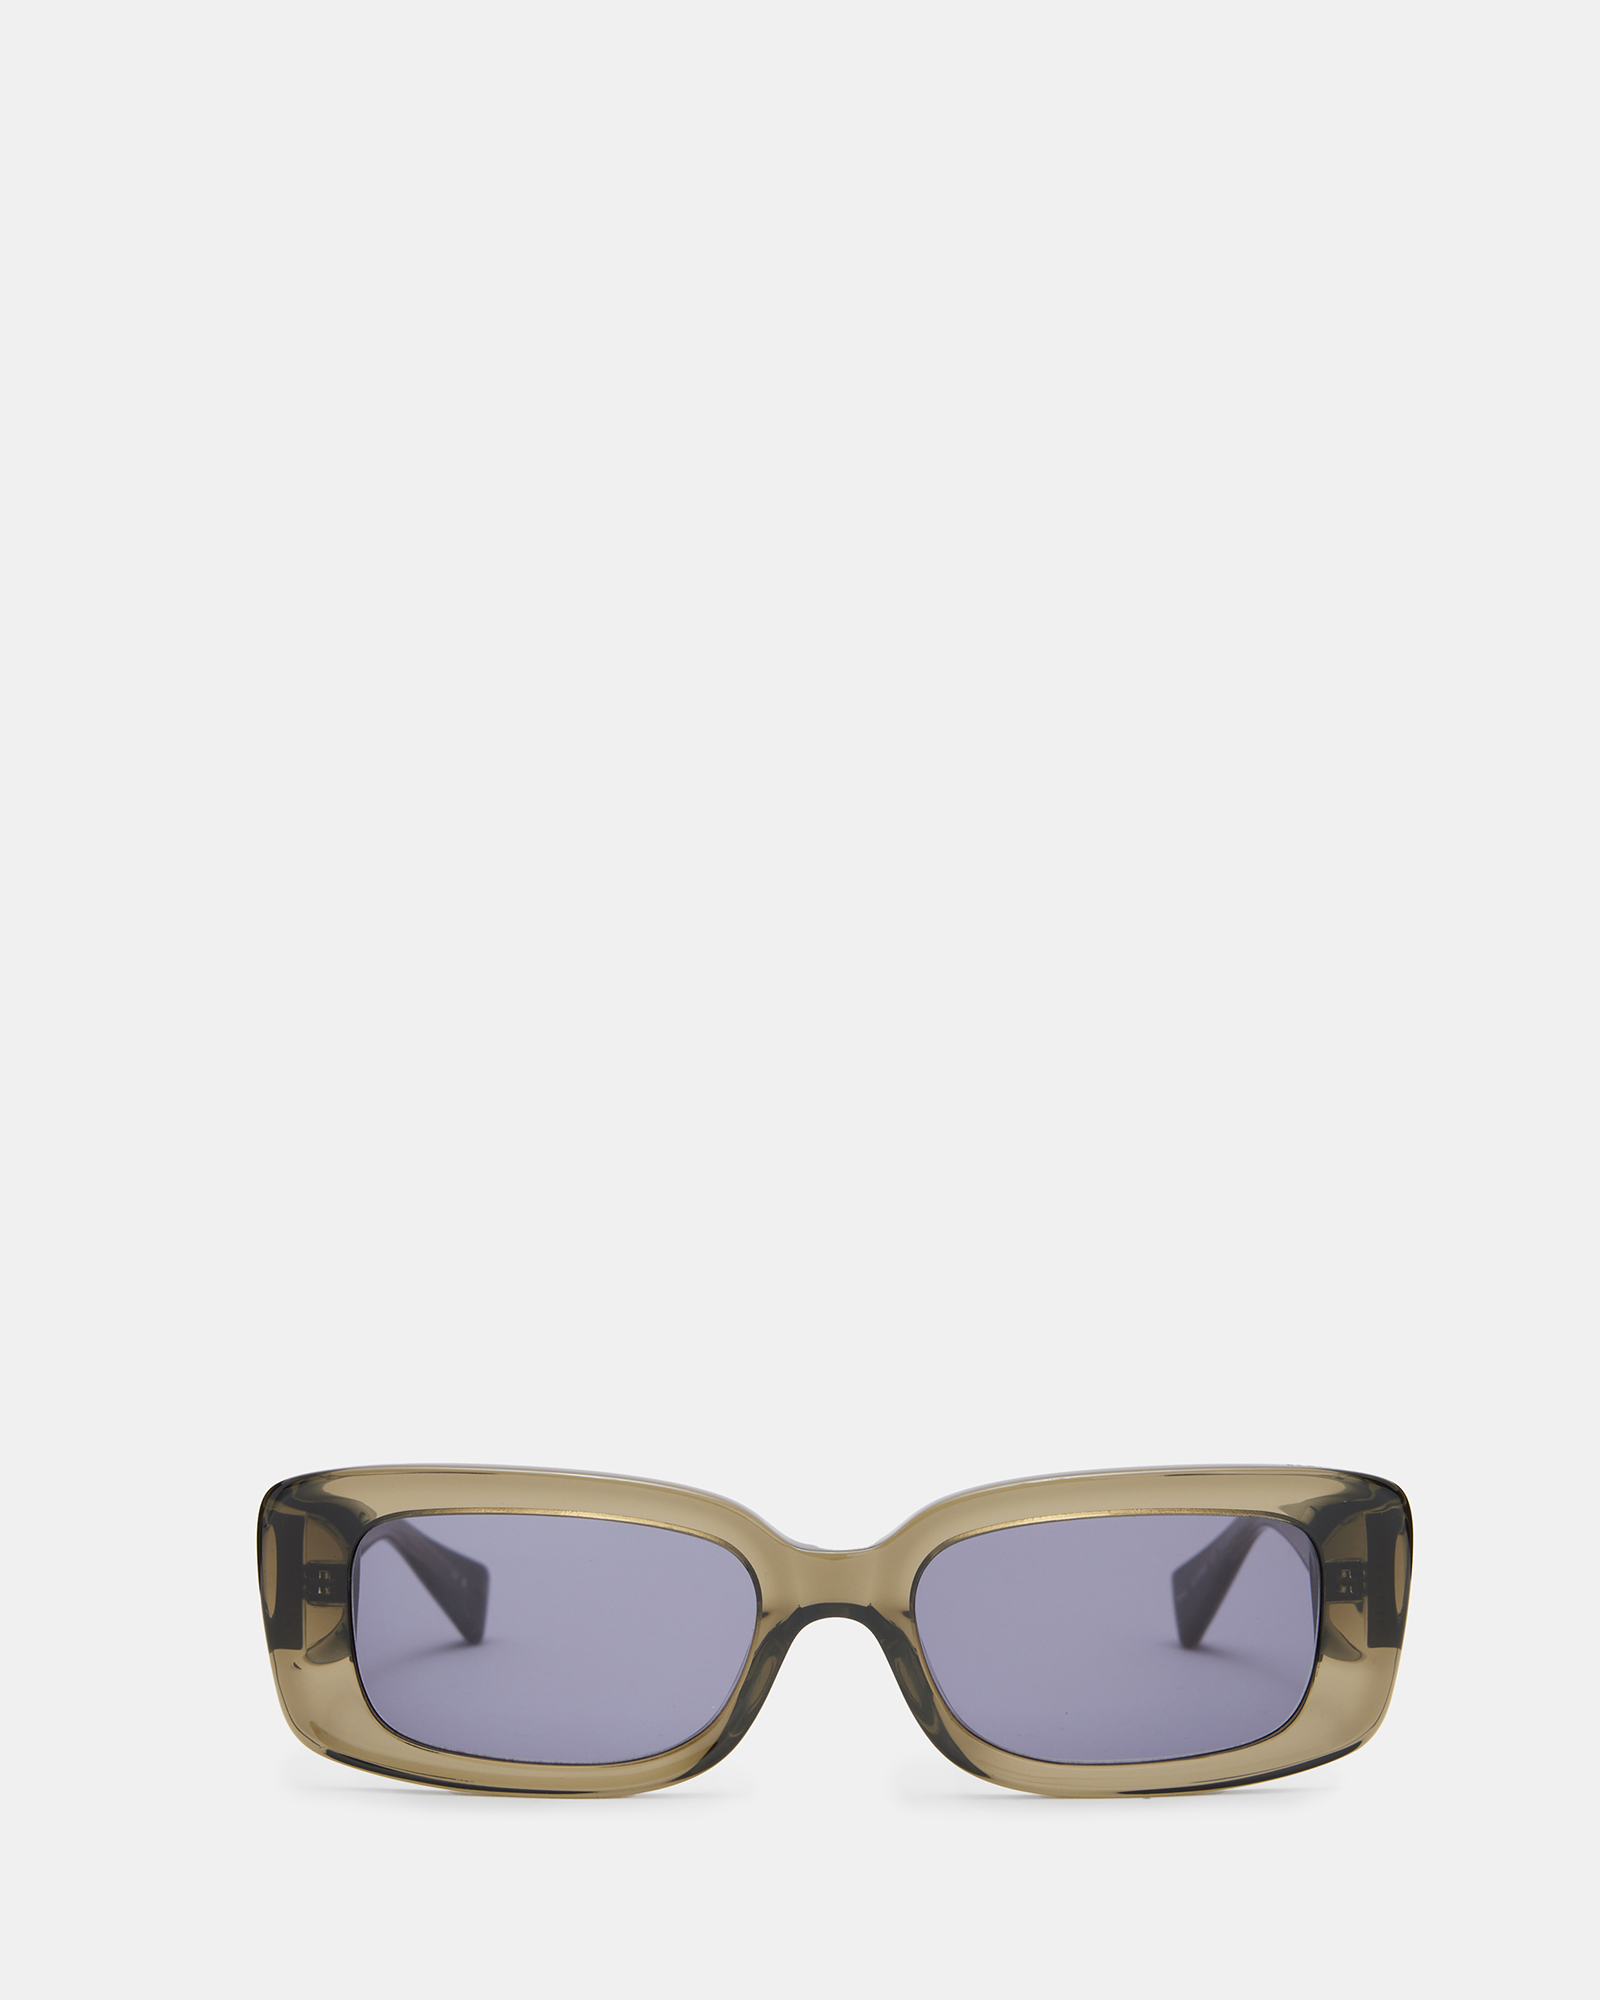 AllSaints Sonic Rectangular Sunglasses,, SMOKE KHAKI